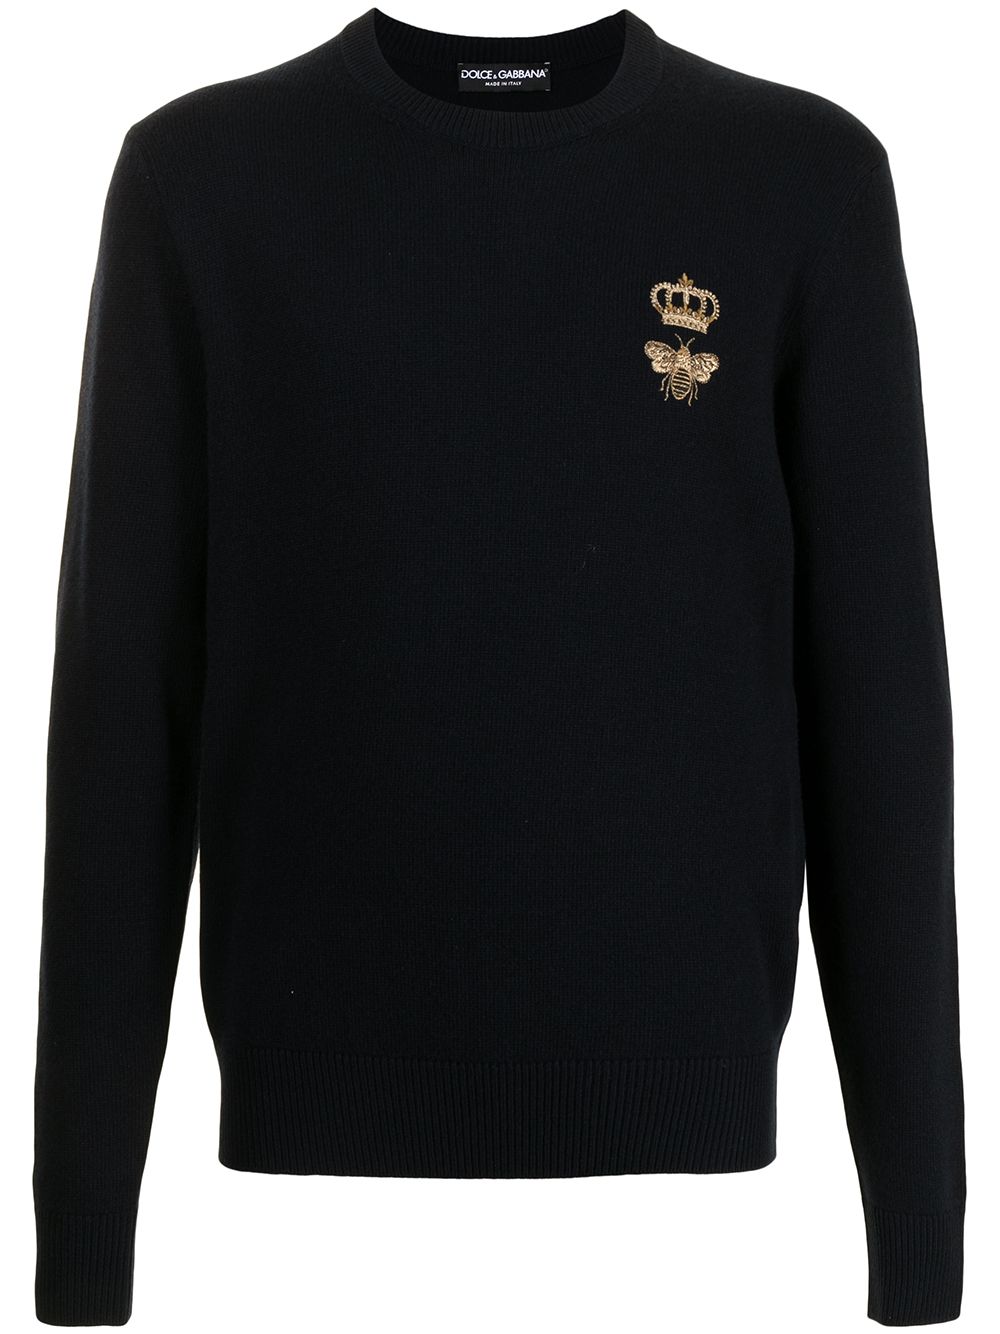 Image 1 of Dolce & Gabbana logo-patch jumper